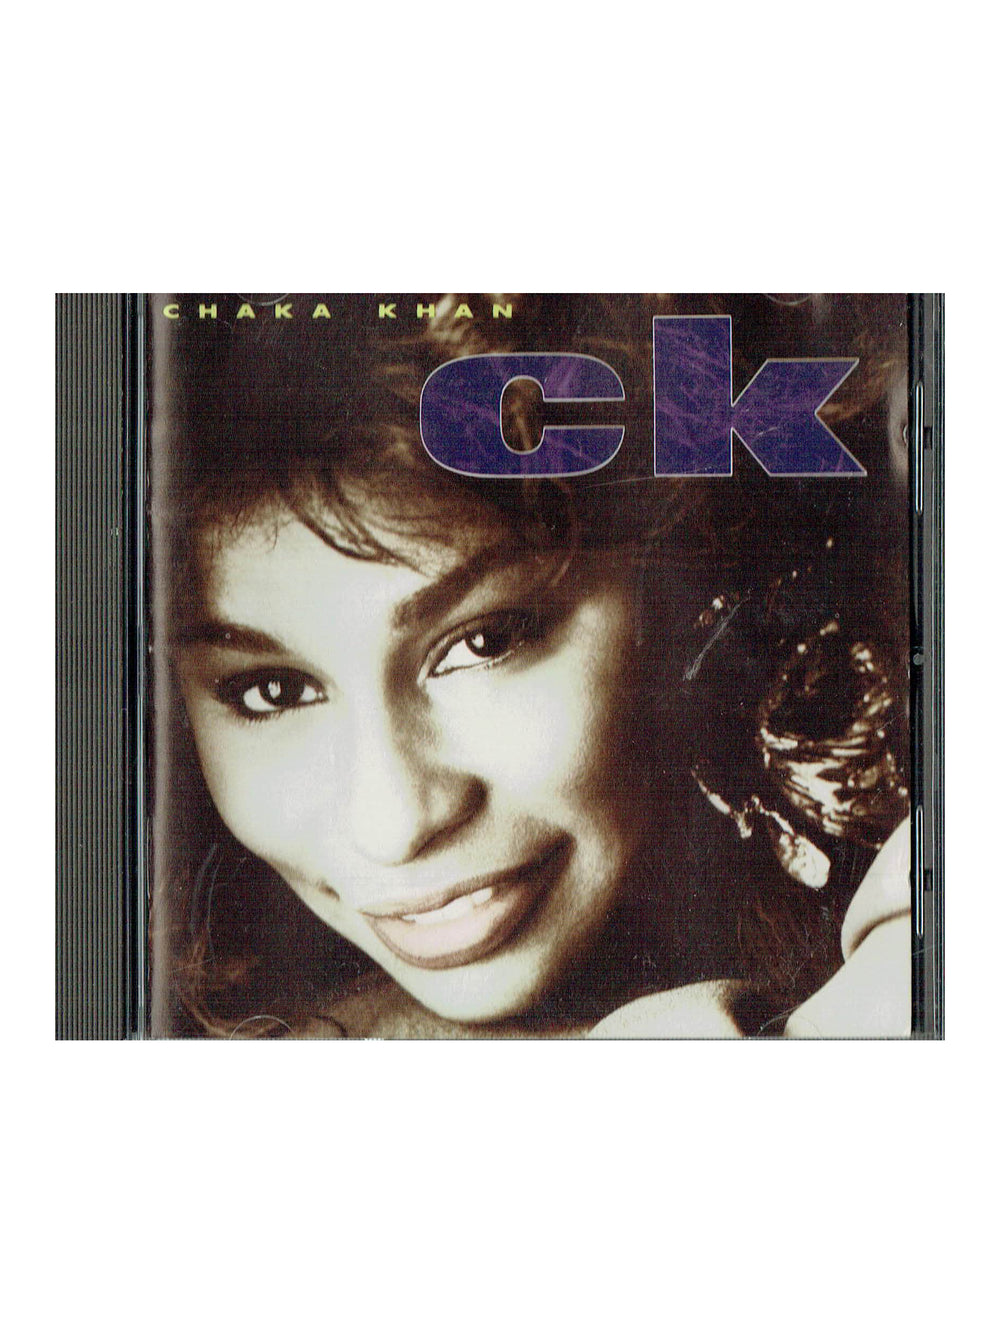 Prince – Chaka Khan C K CD Album 1988 UK EU Release Two Tracks By Prince